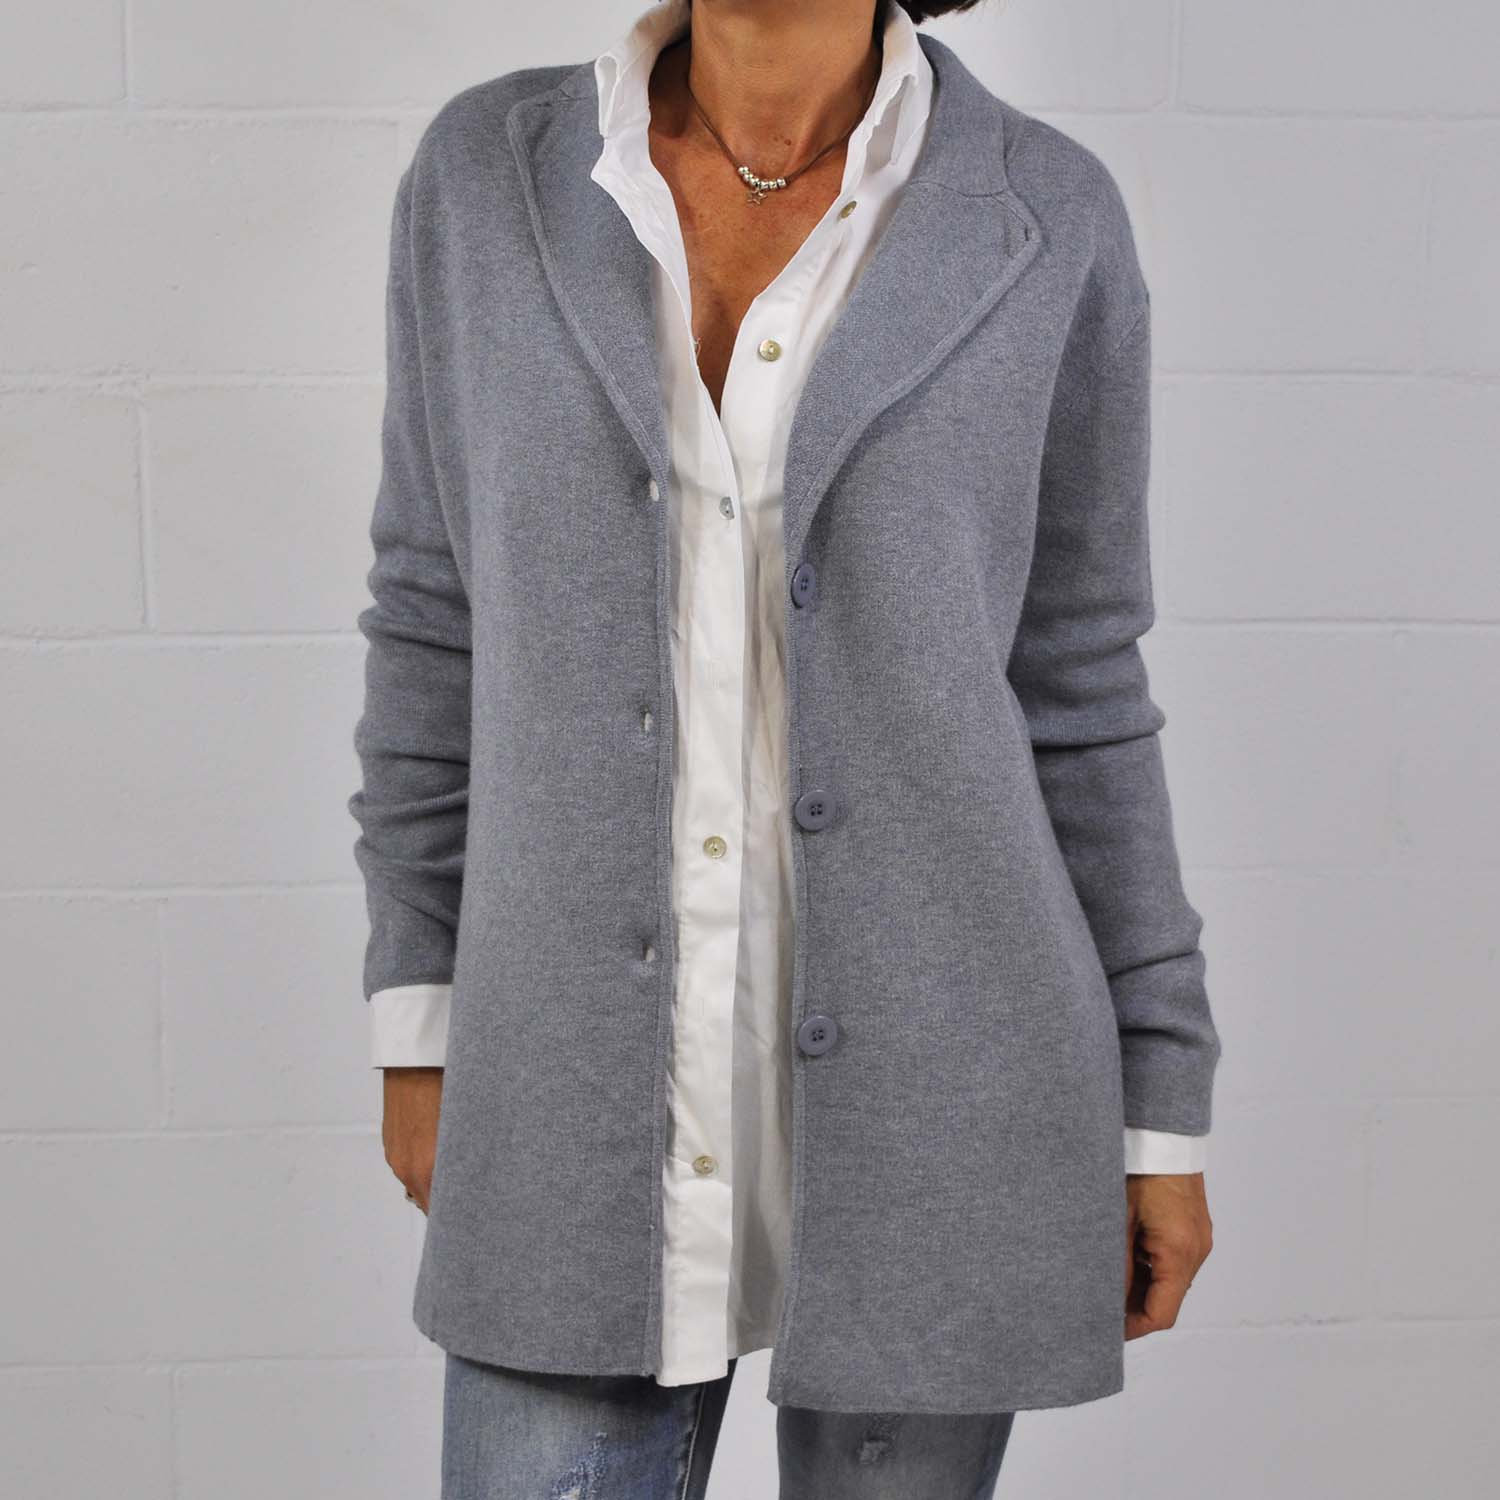 Gray long knitted blazer